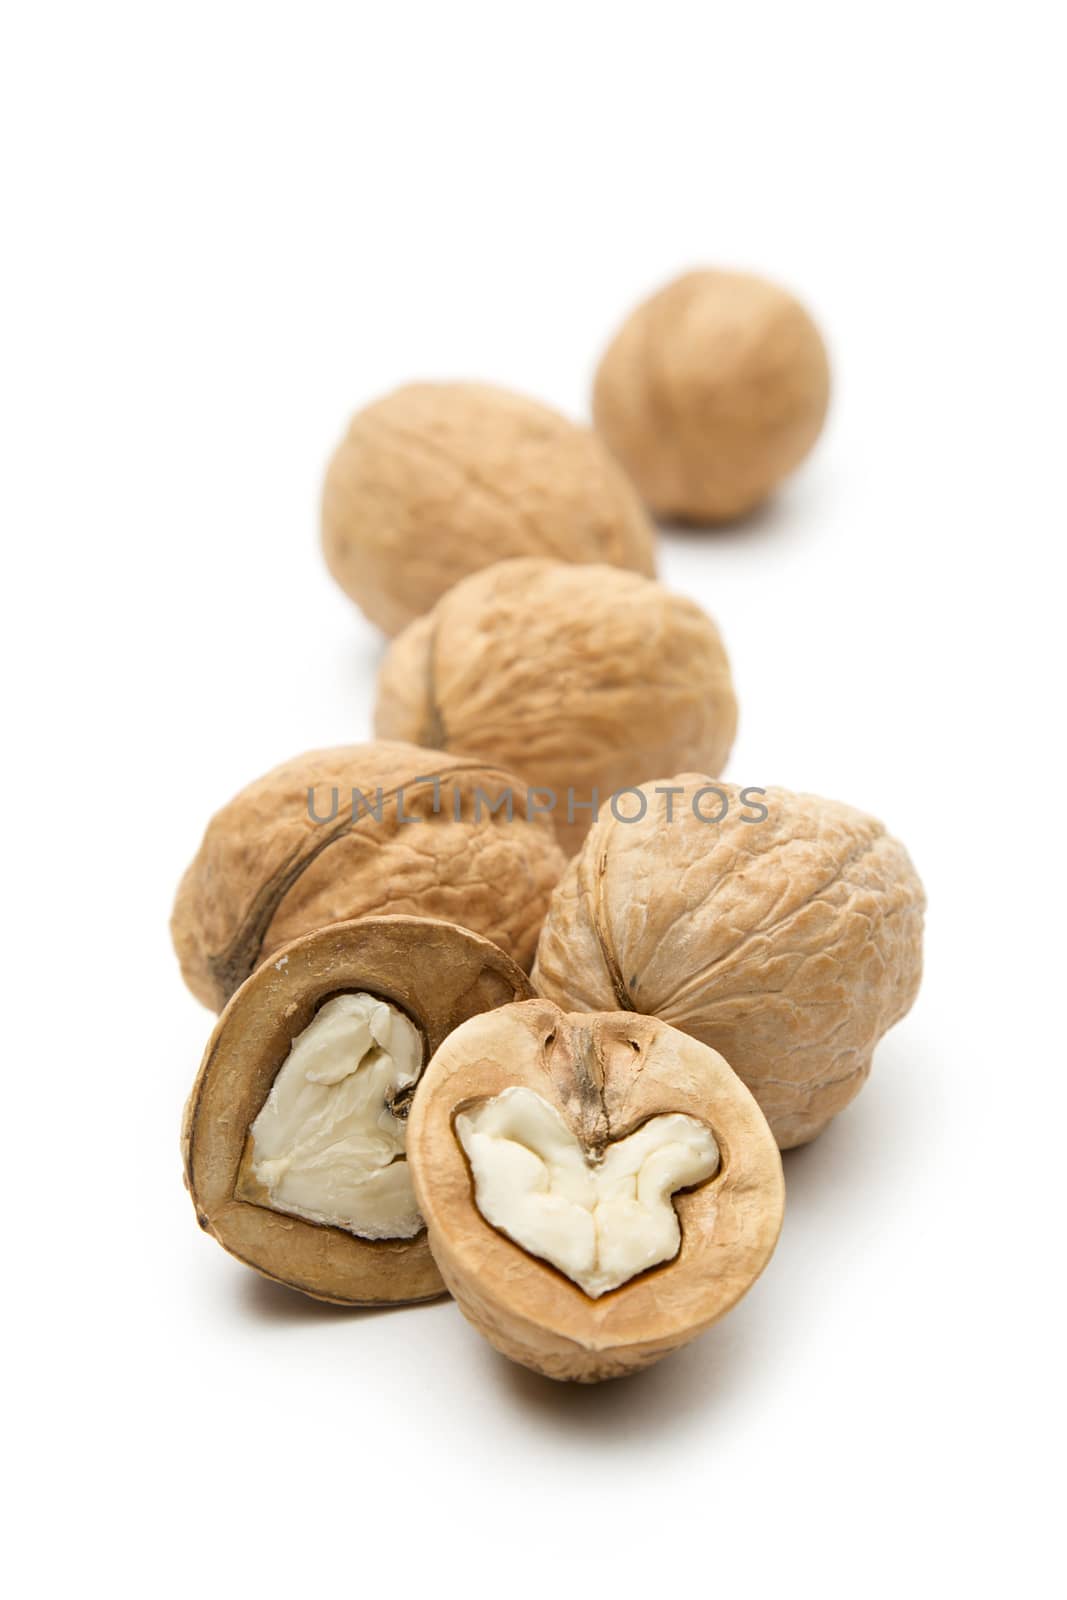 Heap of walnuts on white by Garsya